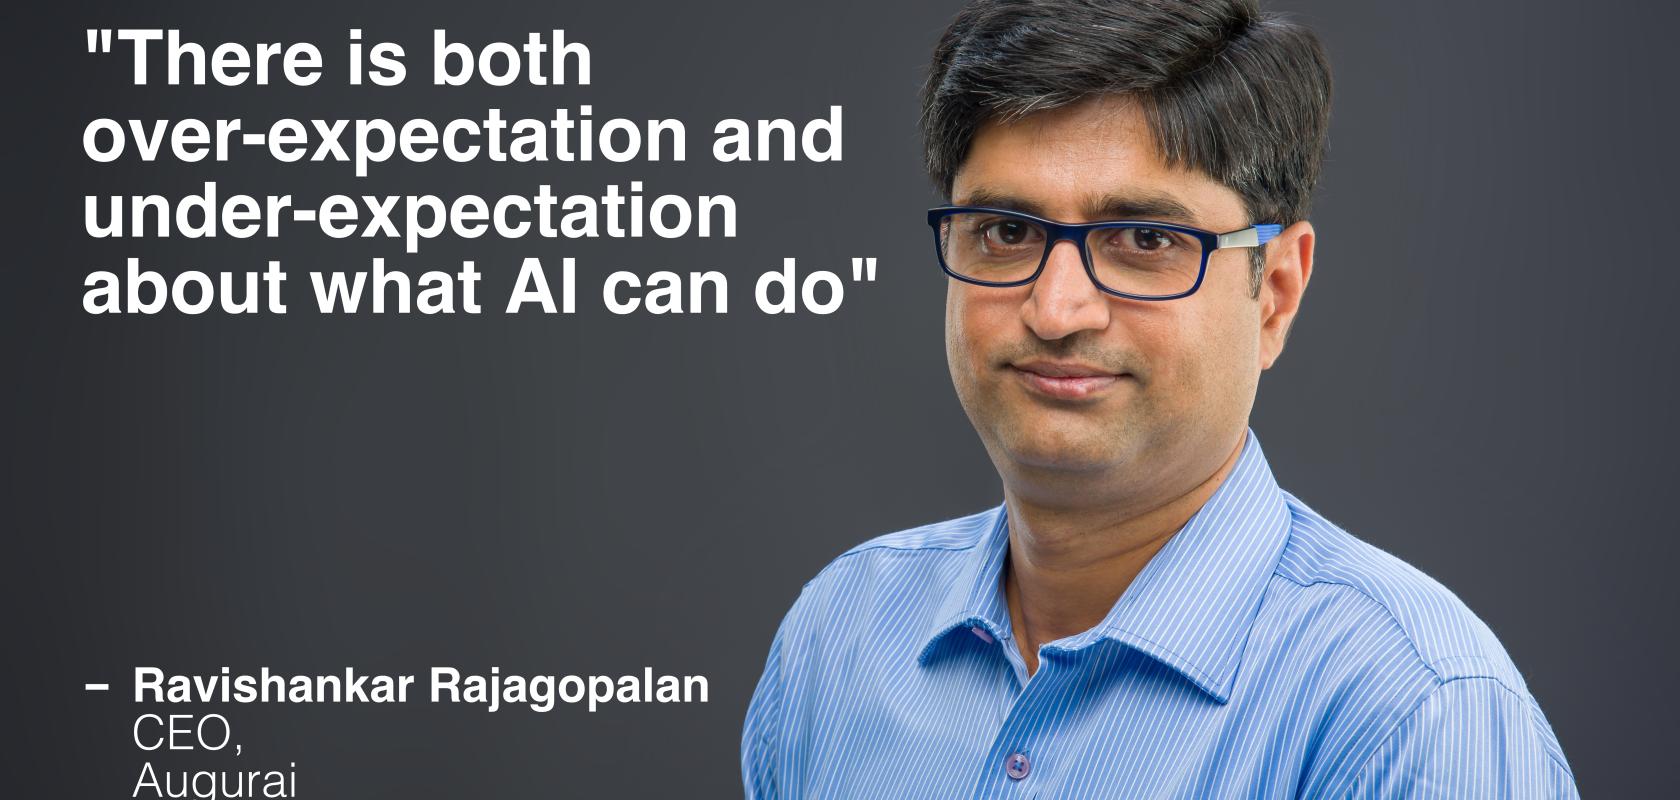 Ravishankar Rajagopalan is CEO of Augurai